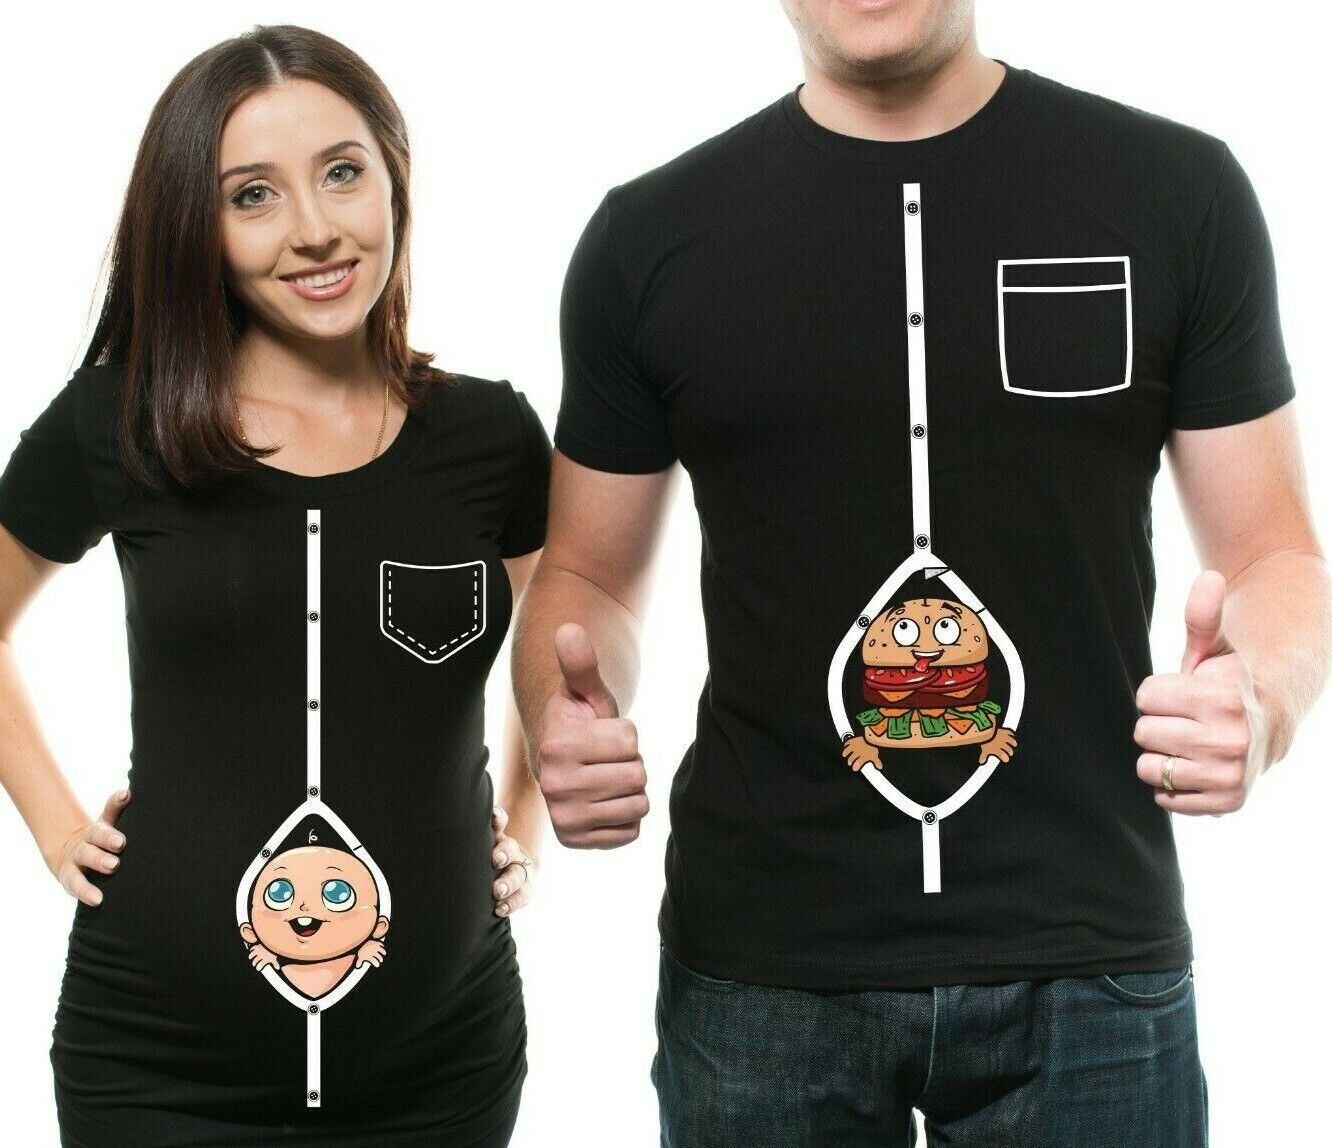 spiller Magtfulde Overskrift Pregnancy Funny Couple T-shirts Pregnancy Announcement Funny Maternity T- shirts | eBay